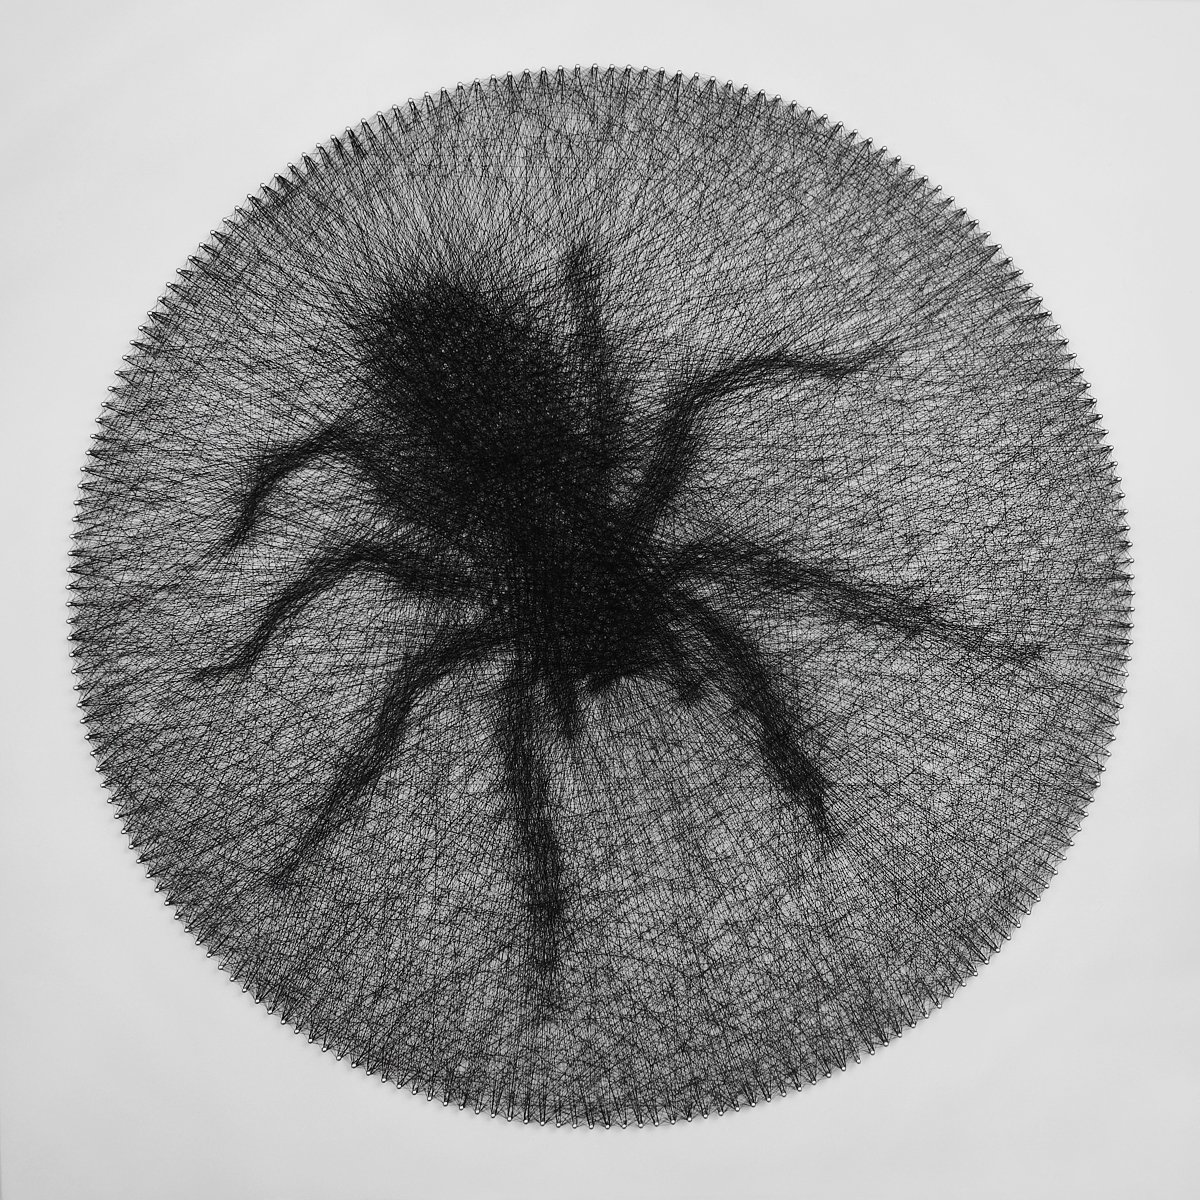 Spider string art by Andrey Saharov